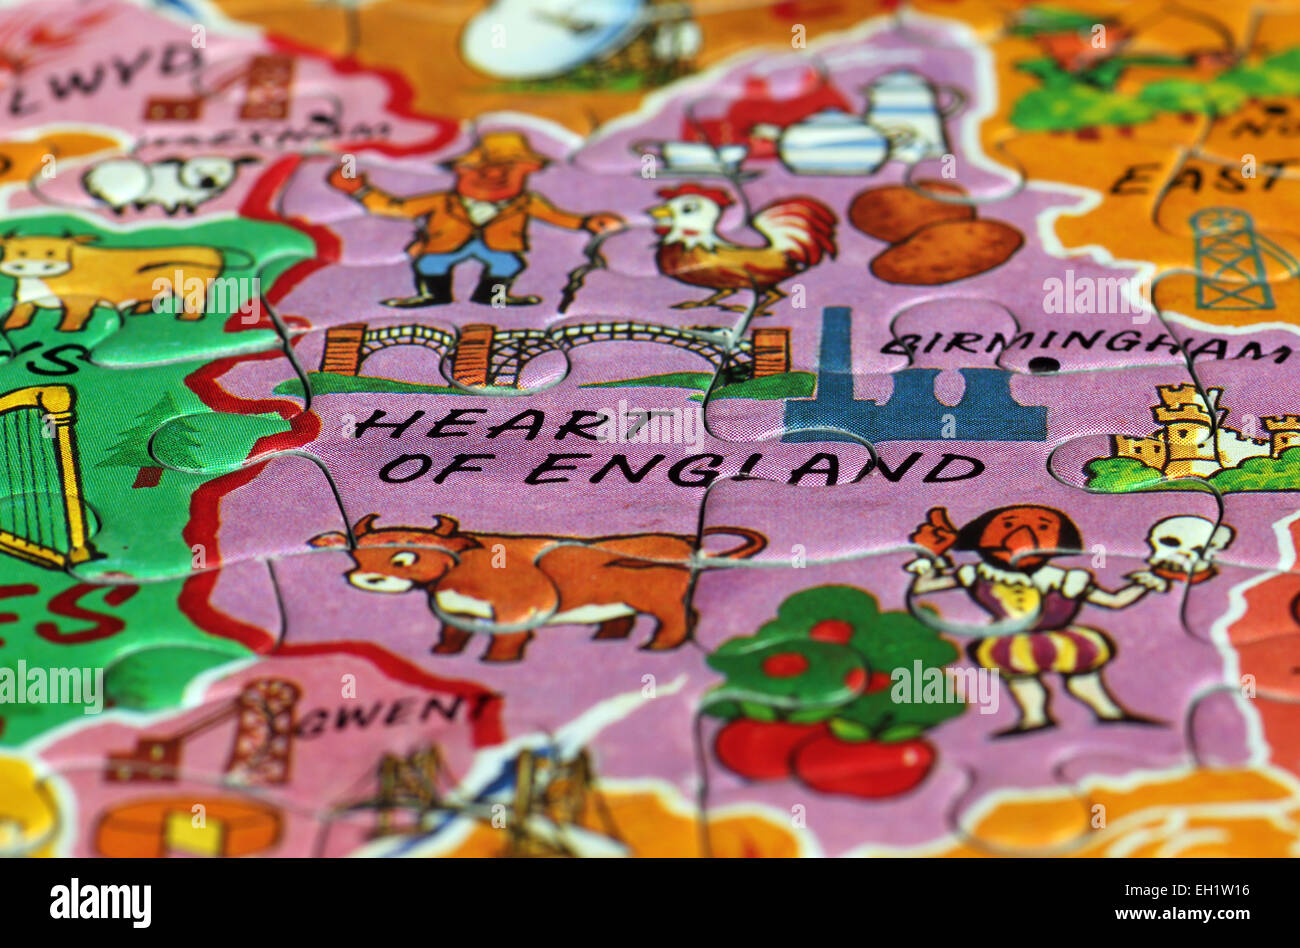 Heart of England macro image of jigsaw puzzle Stock Photo